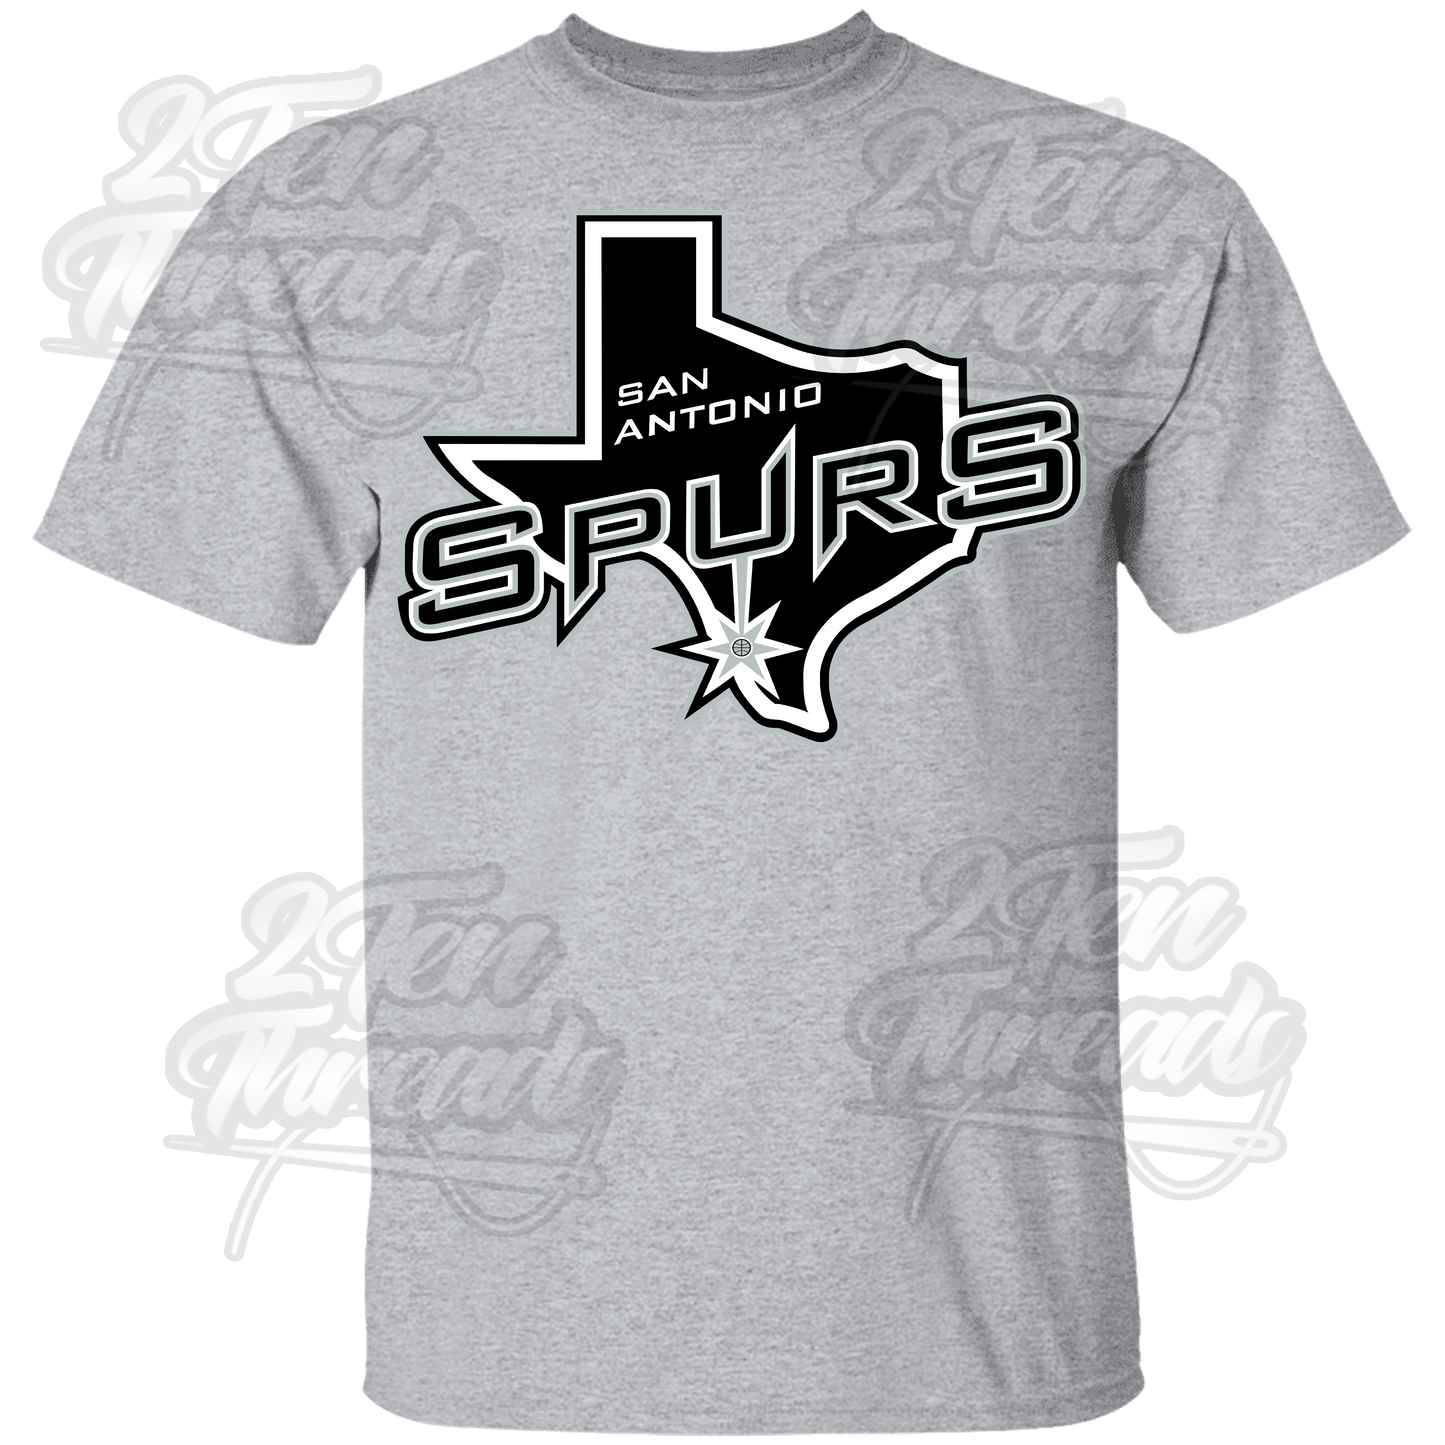 The Texas Spur Shirt